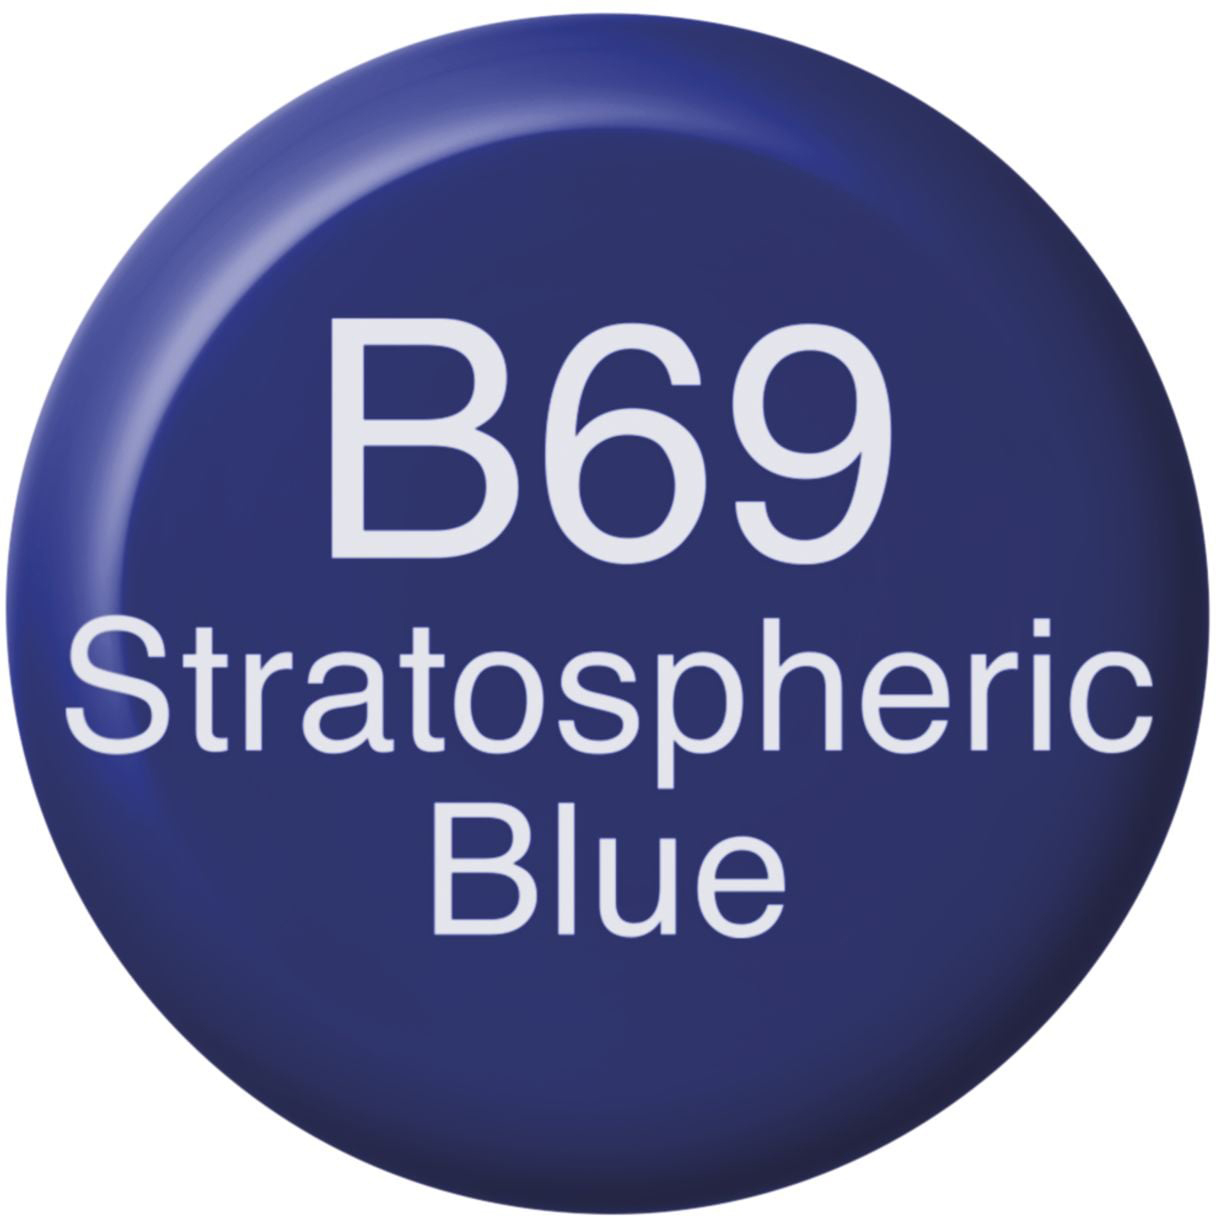 COPIC Ink Refill 21076308 B69 - Stratospheric Blue B69 - Stratospheric Blue